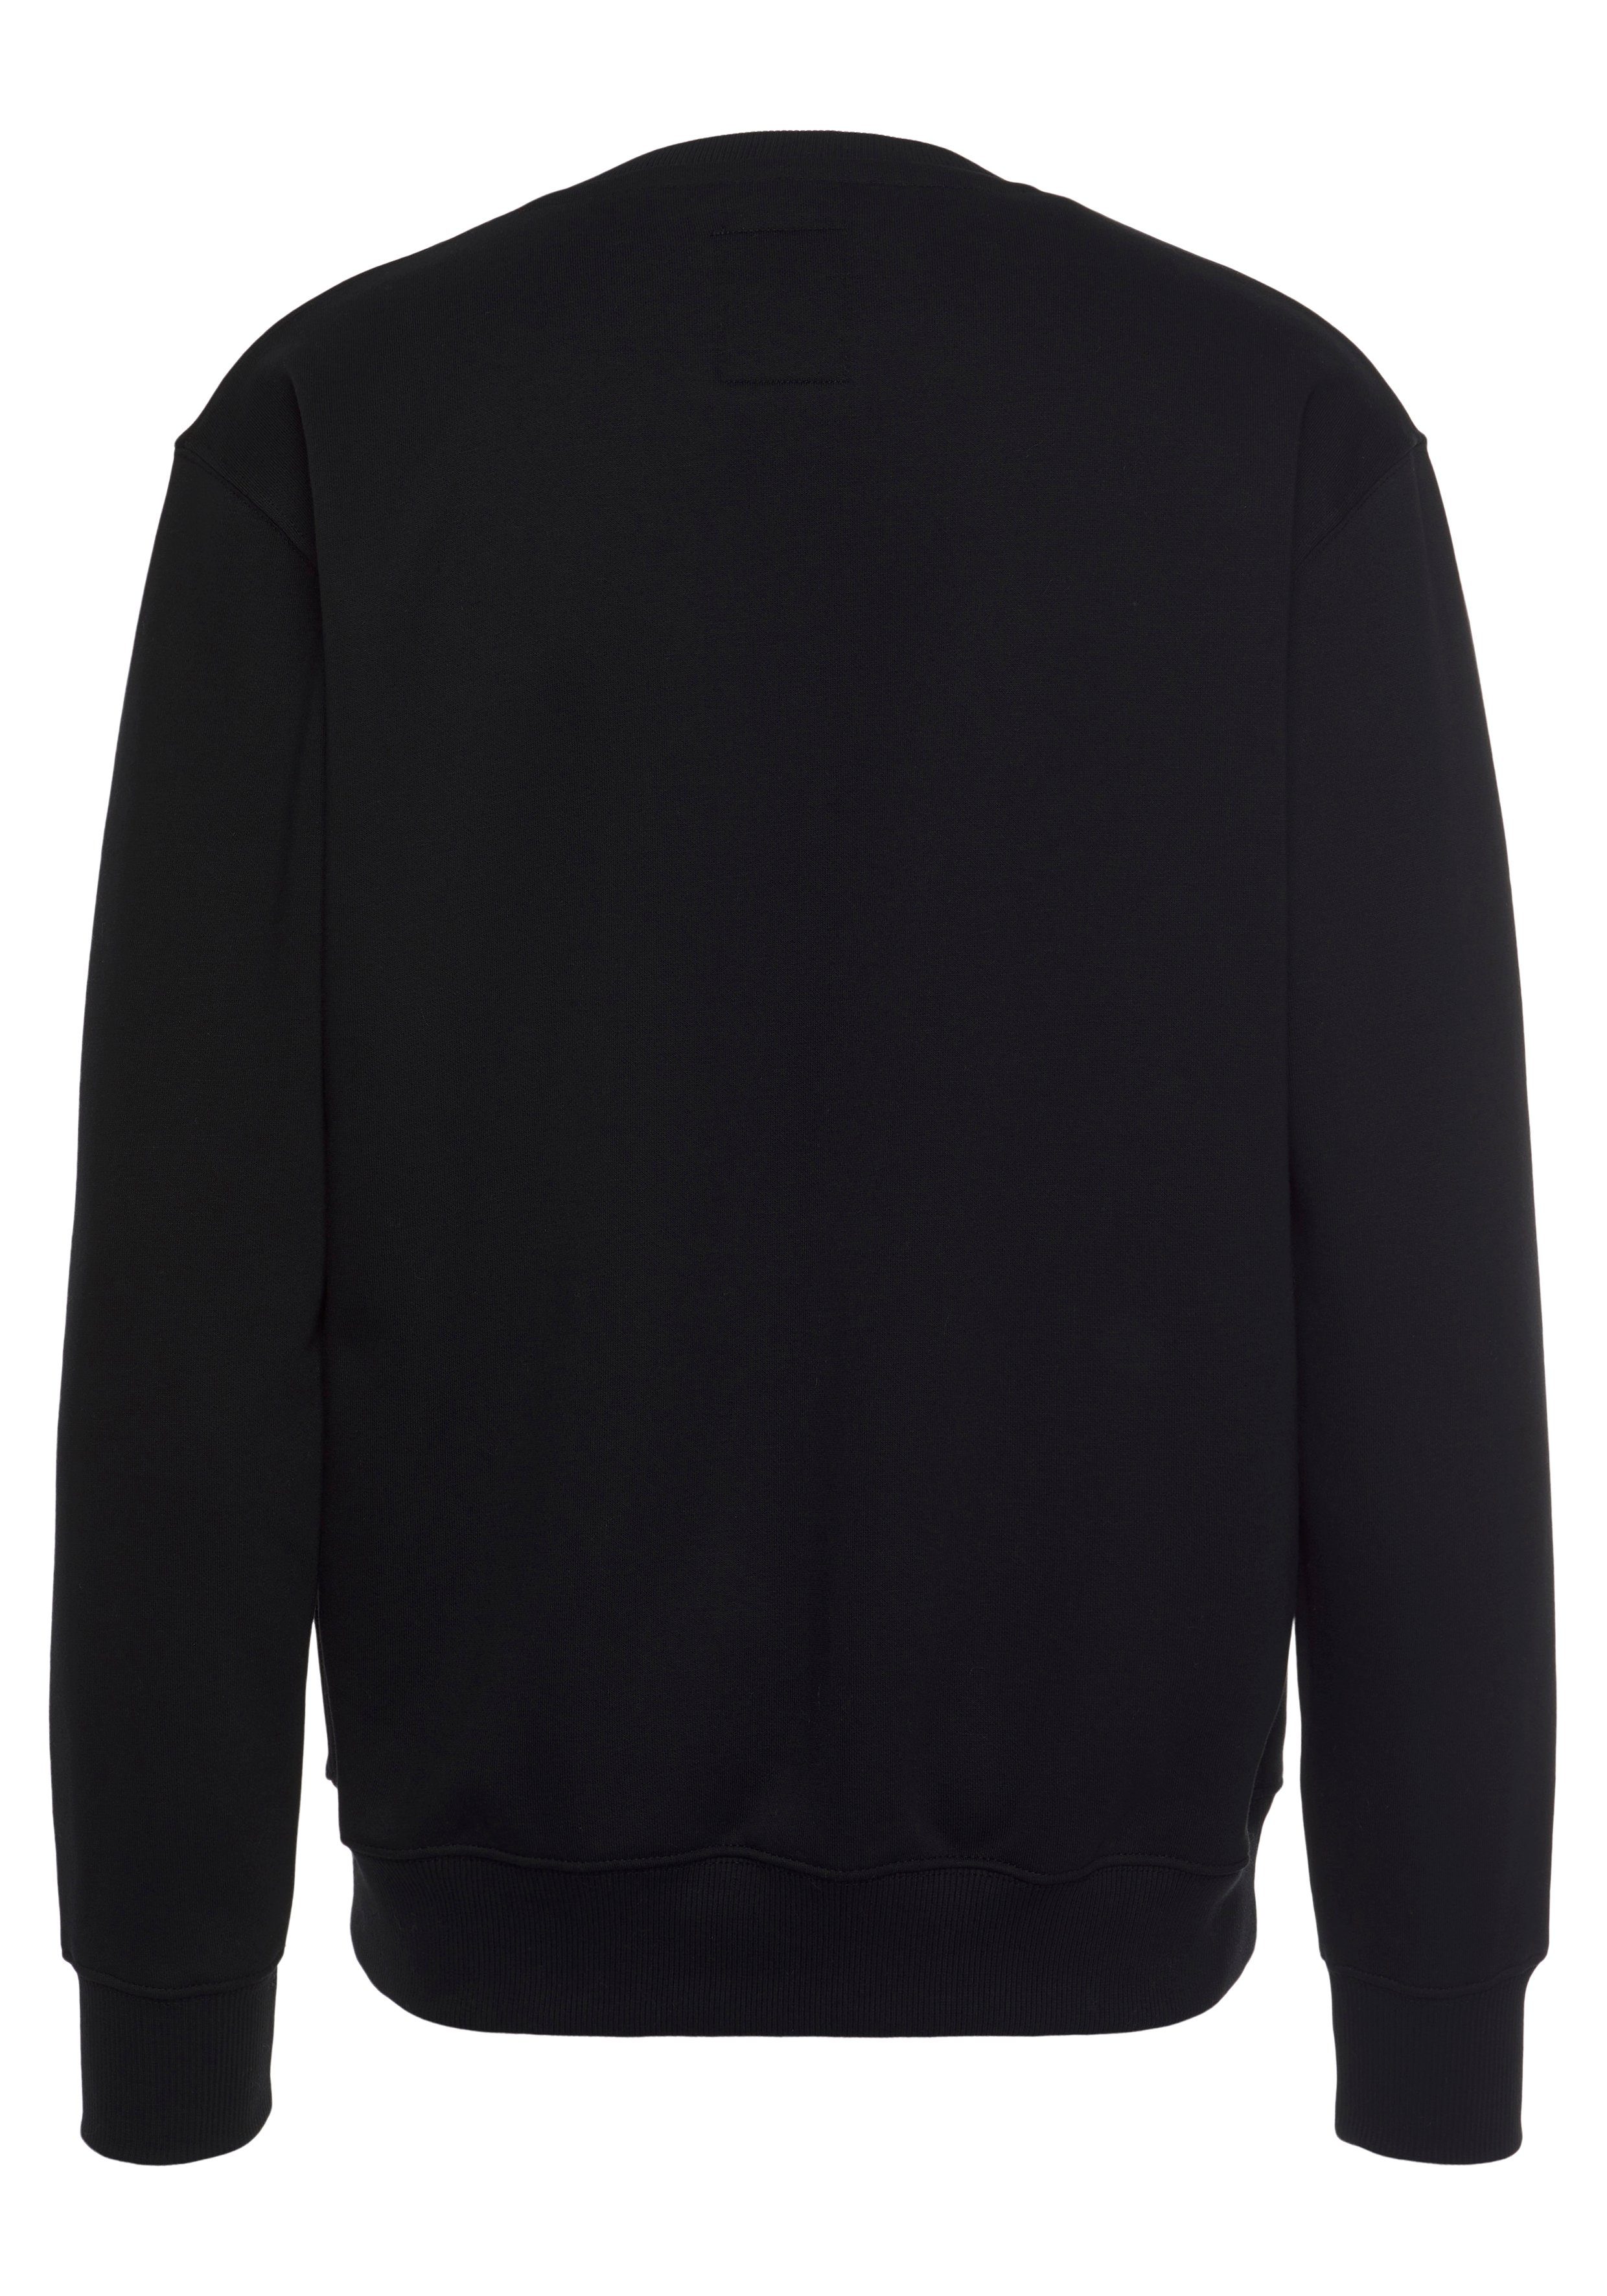 Basic black Sweater Sweatshirt Alpha Industries